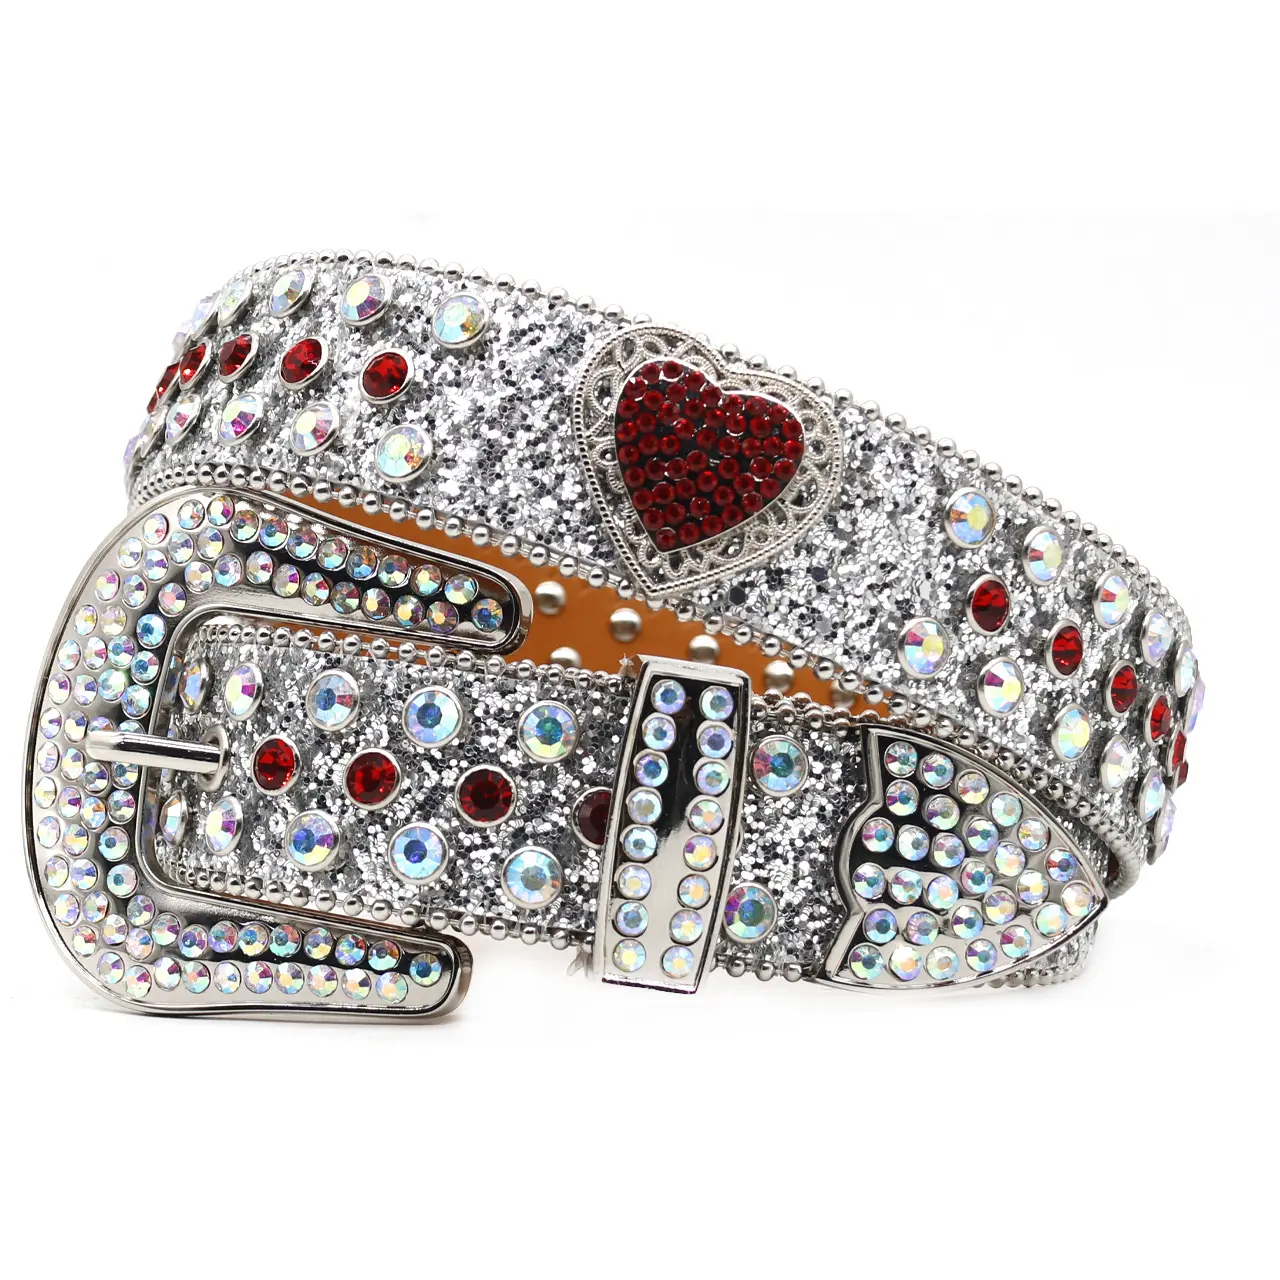 Hotsale sabuk berlian imitasi wanita tren mode Punk desain Cinta sabuk berlian imitasi lebar kristal mewah Barat